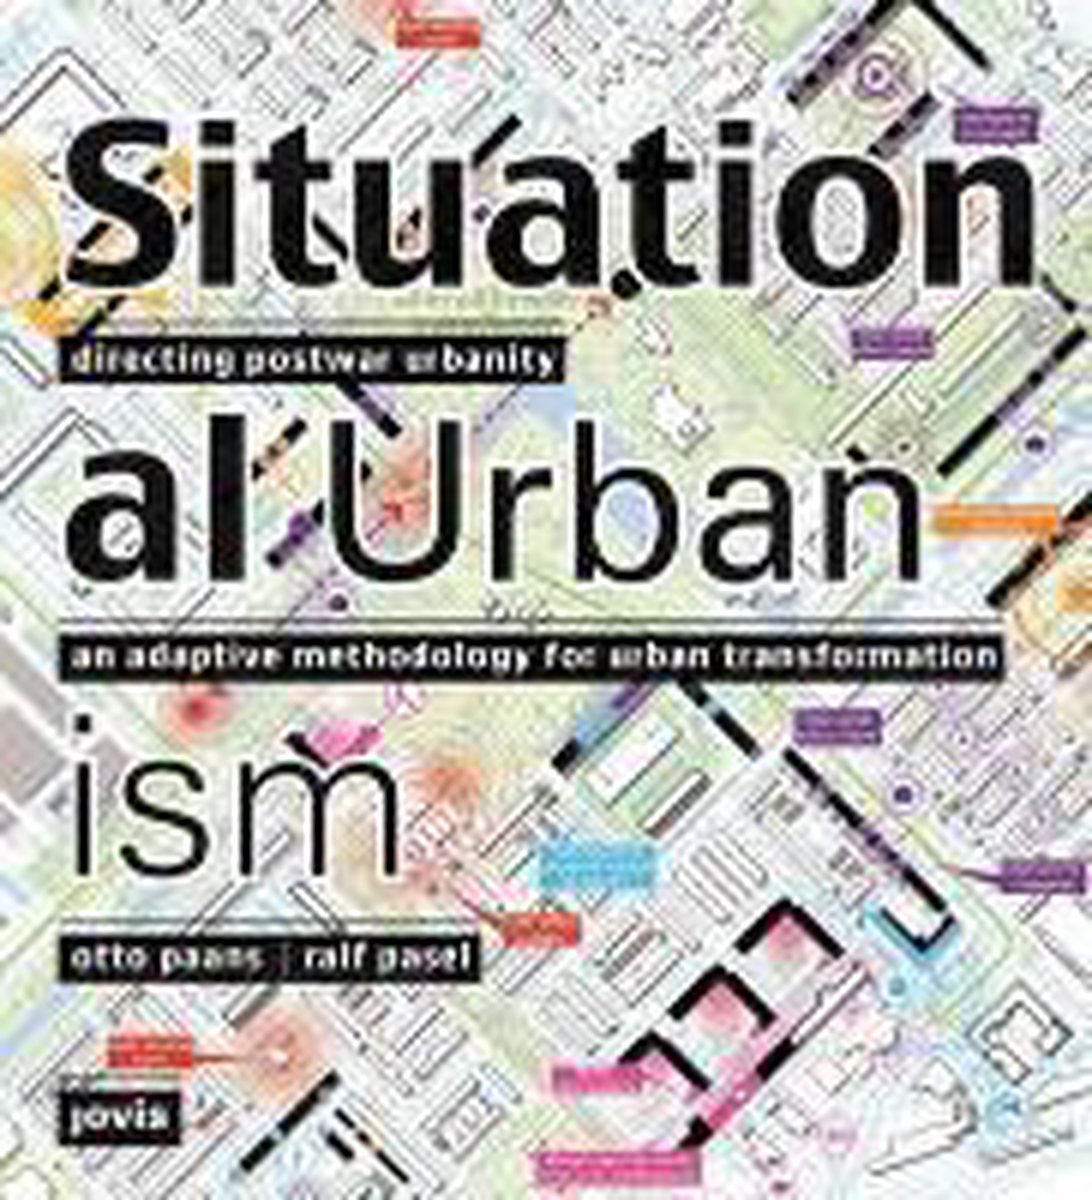 Situational Urbanism: Directing Postwar Urbanity